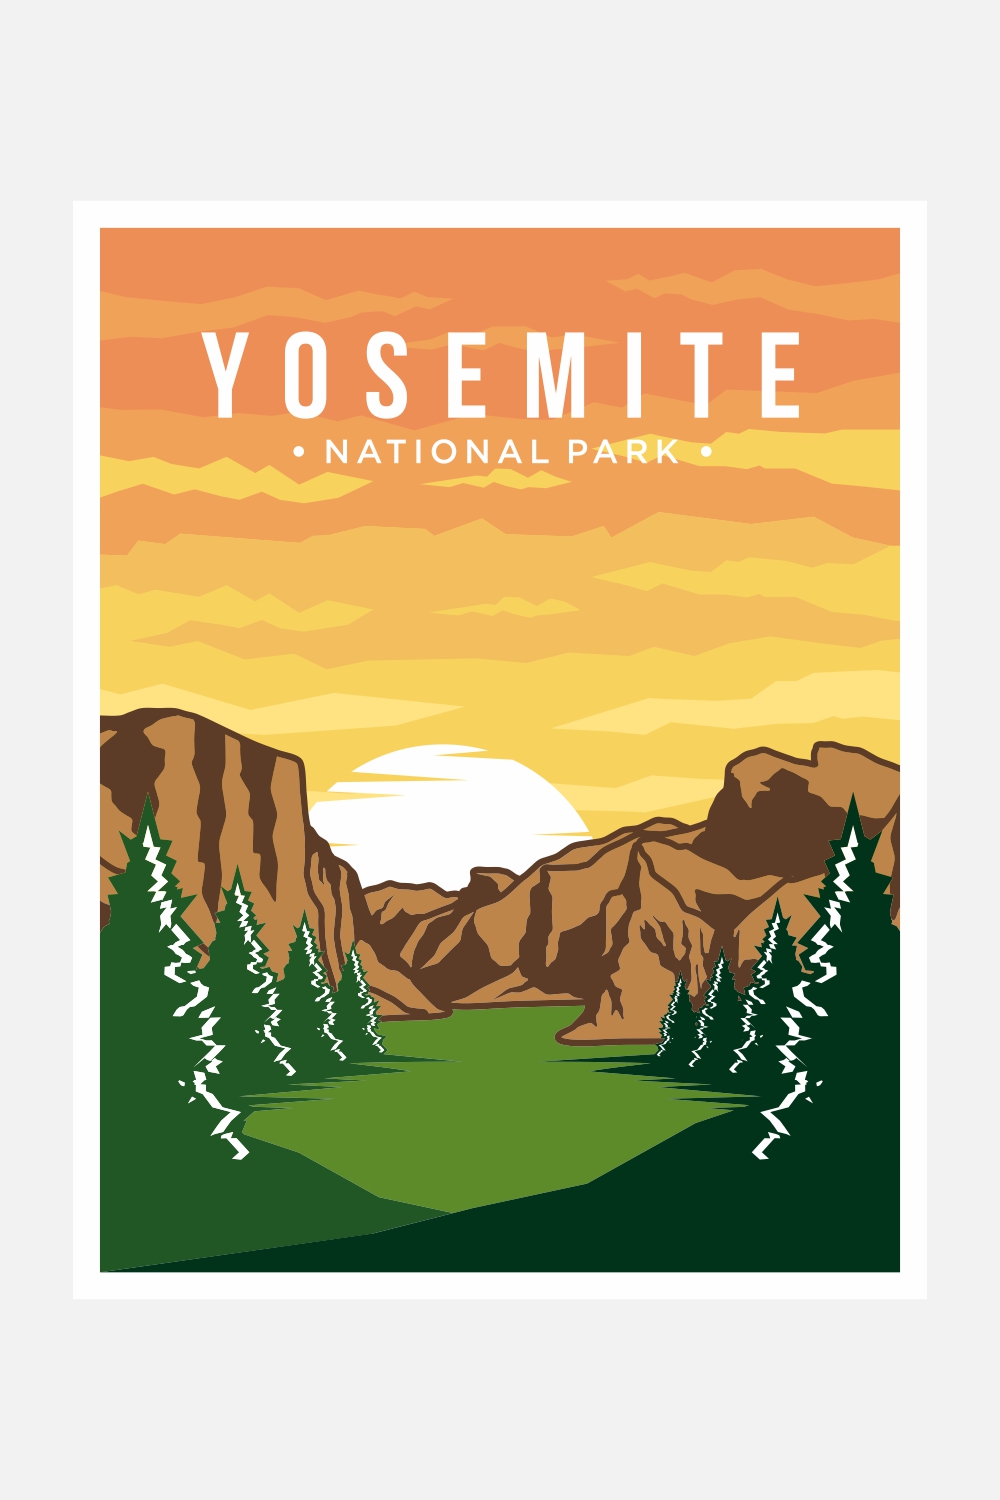 Yosemite National Park poster vector illustration design – Only $8 pinterest preview image.